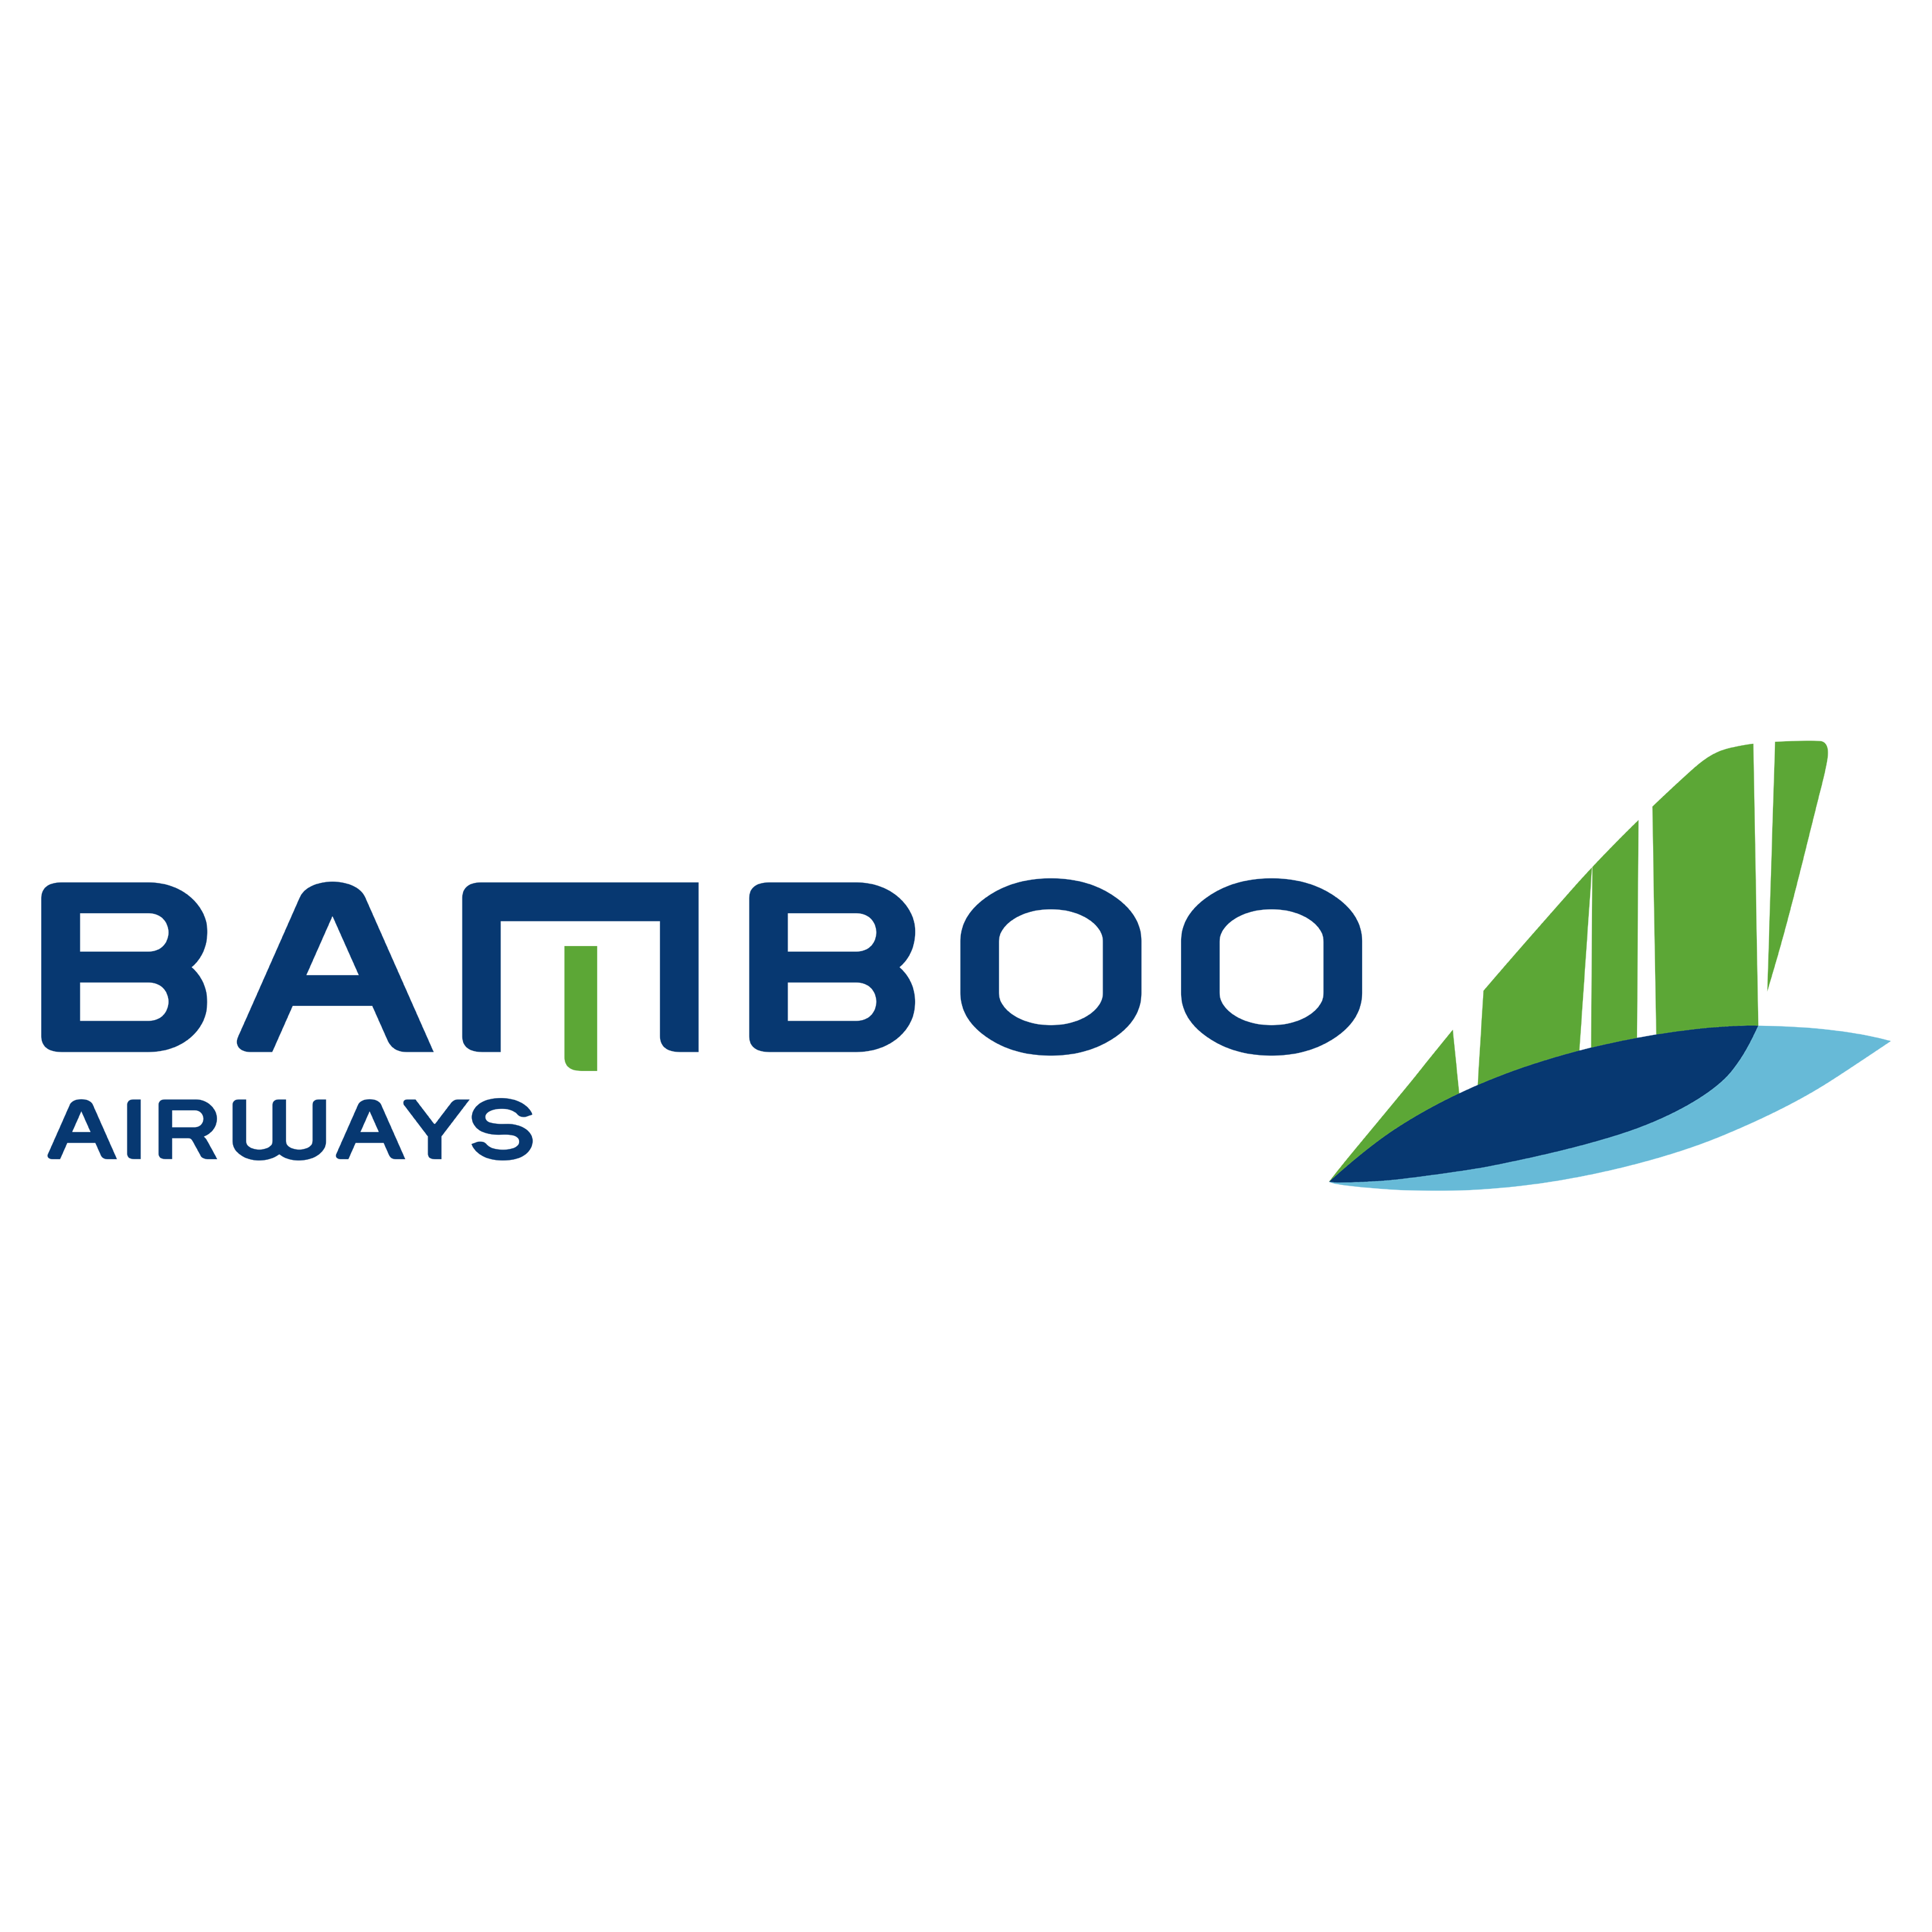 Bamboo Airways Logo Transparent Image